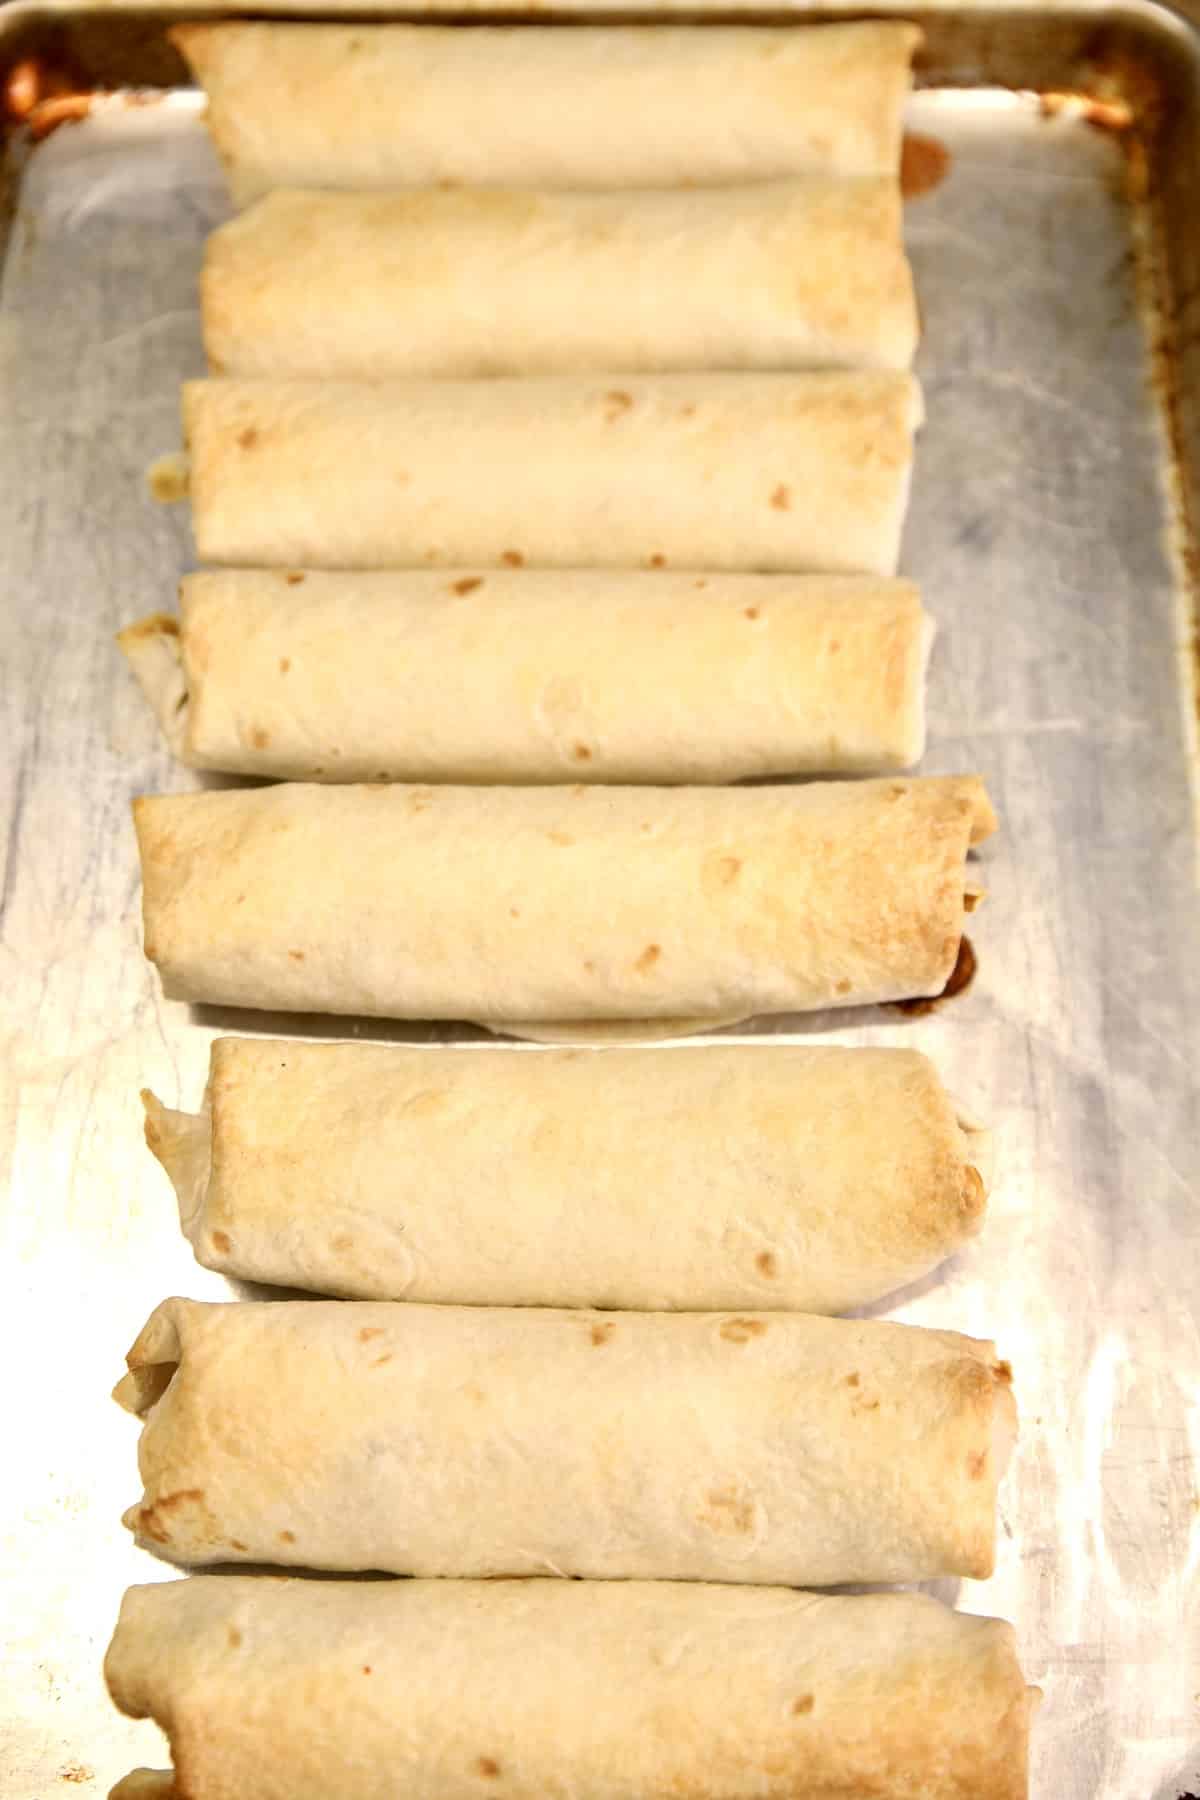 Crispy baked burritos on a sheet pan.